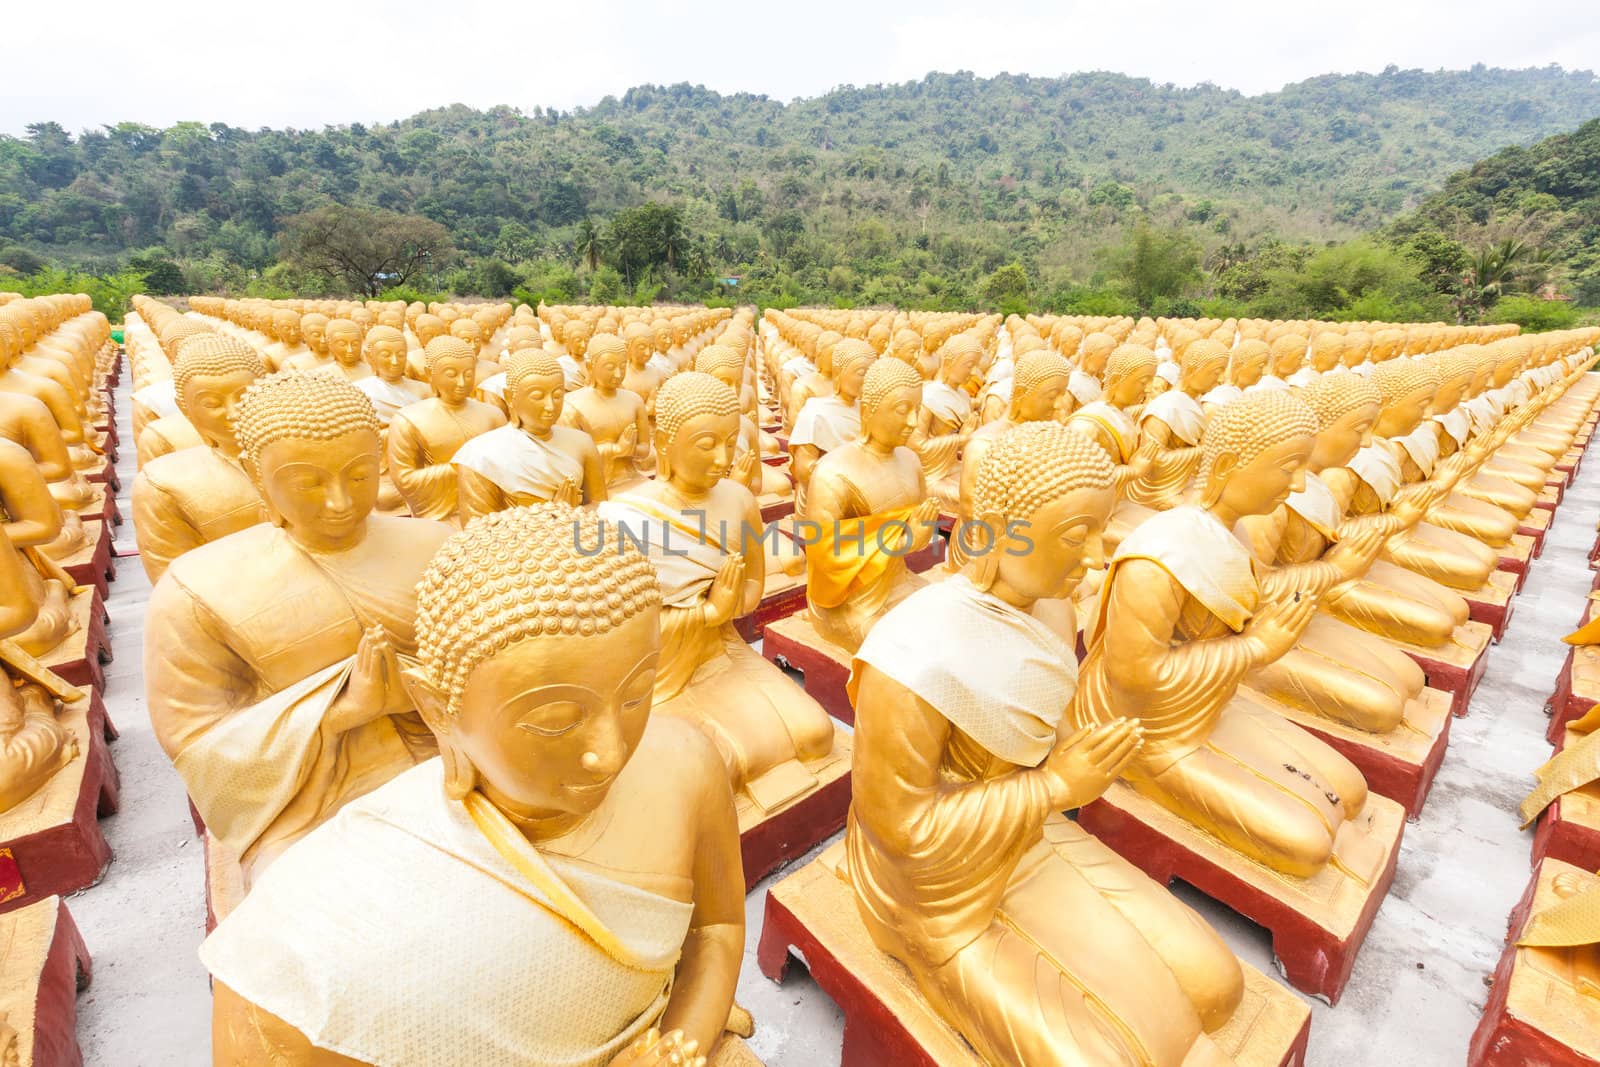 Golden buddha at Buddha Memorial park  by jame_j@homail.com